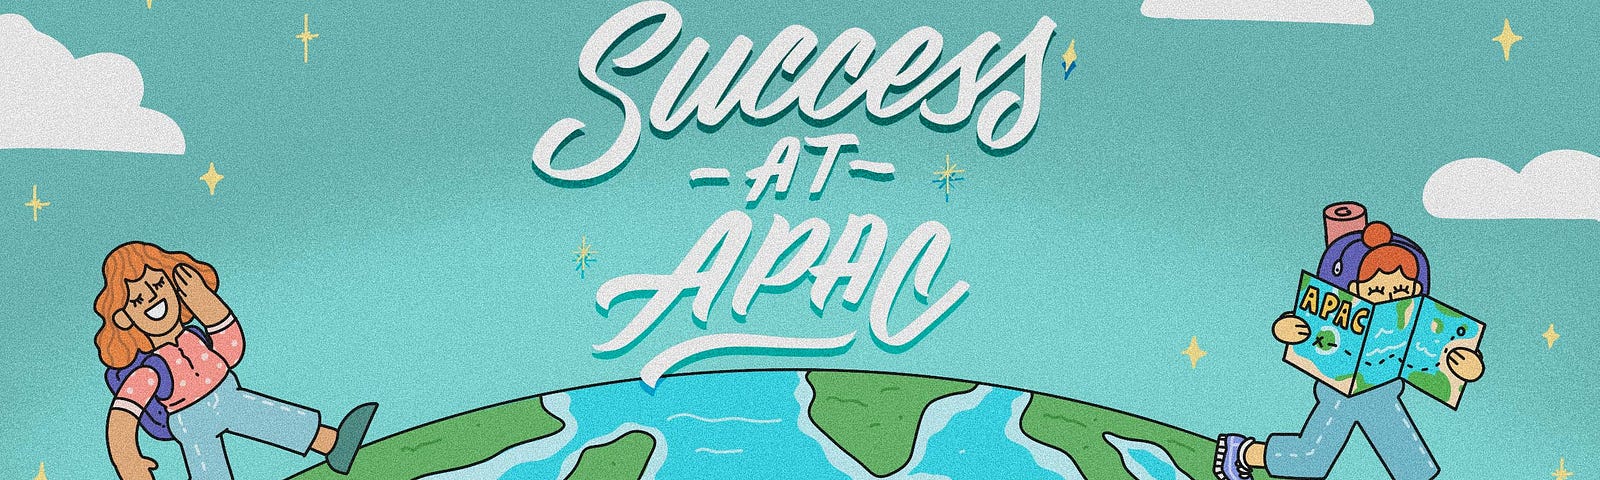 Success at APAC cover image